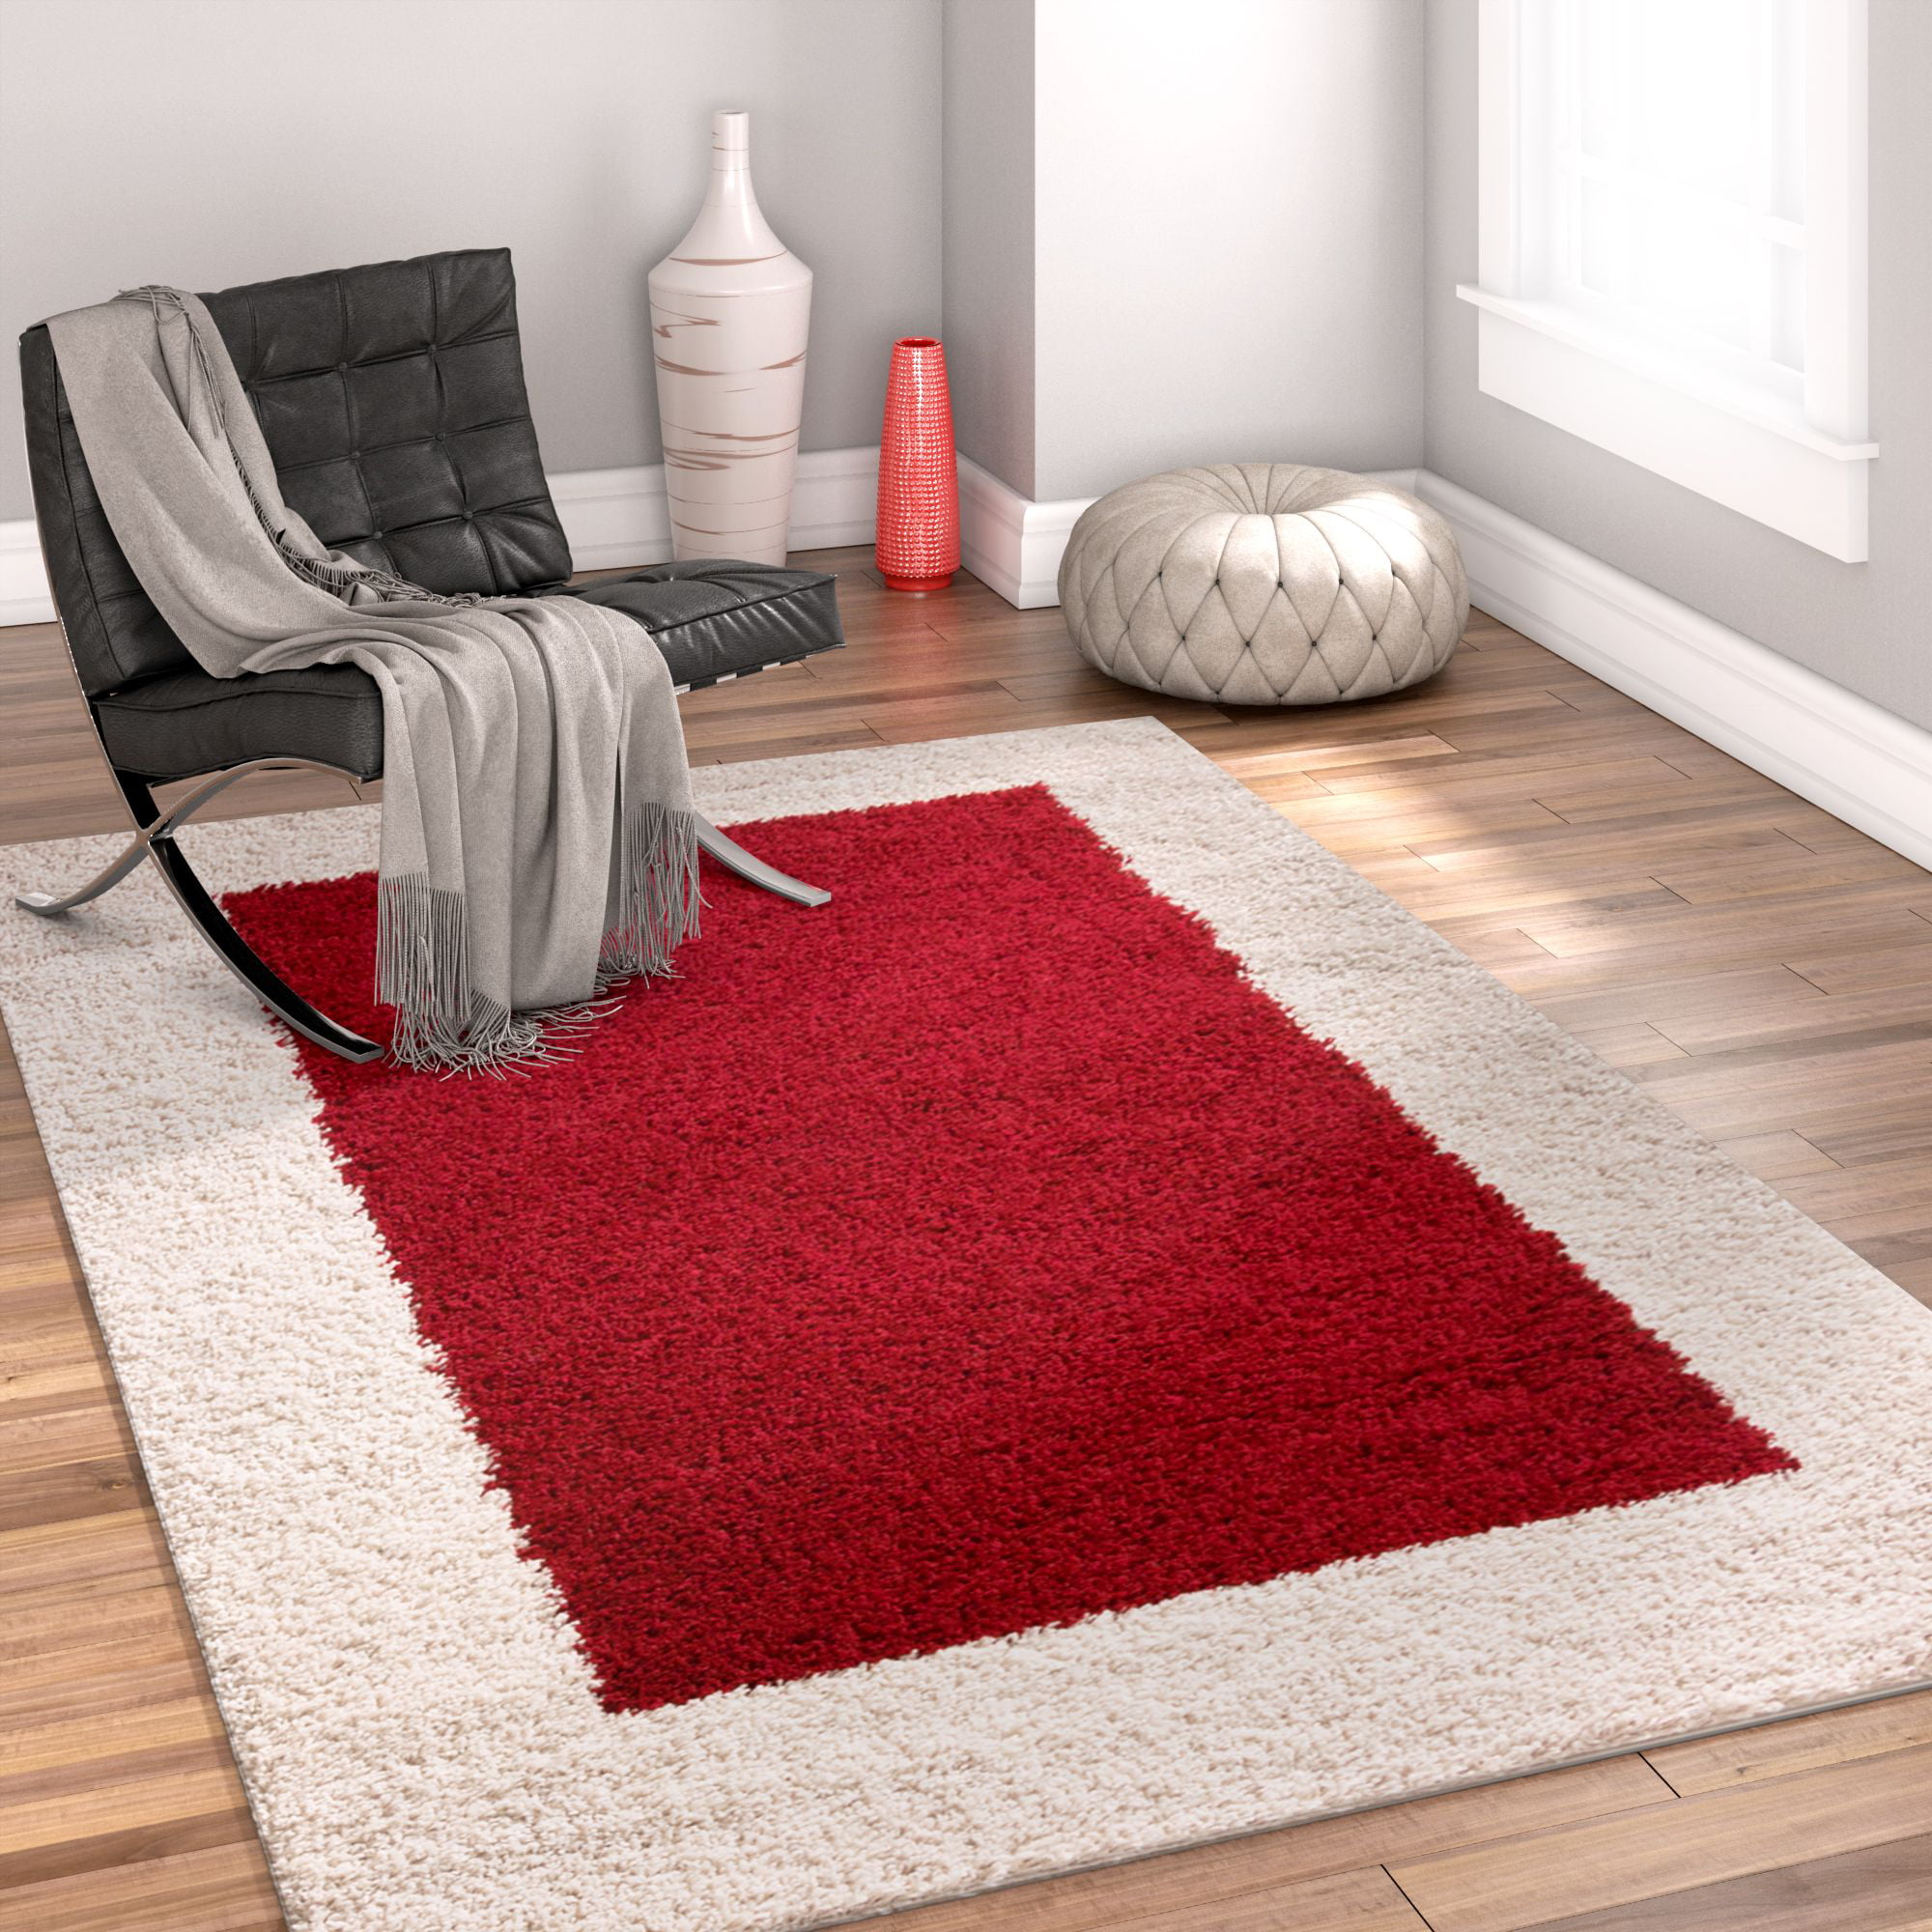 Non-slip Round Big Red Shoe Lipstick Area Rugs Room Floor Yoga Carpet Door Mat 